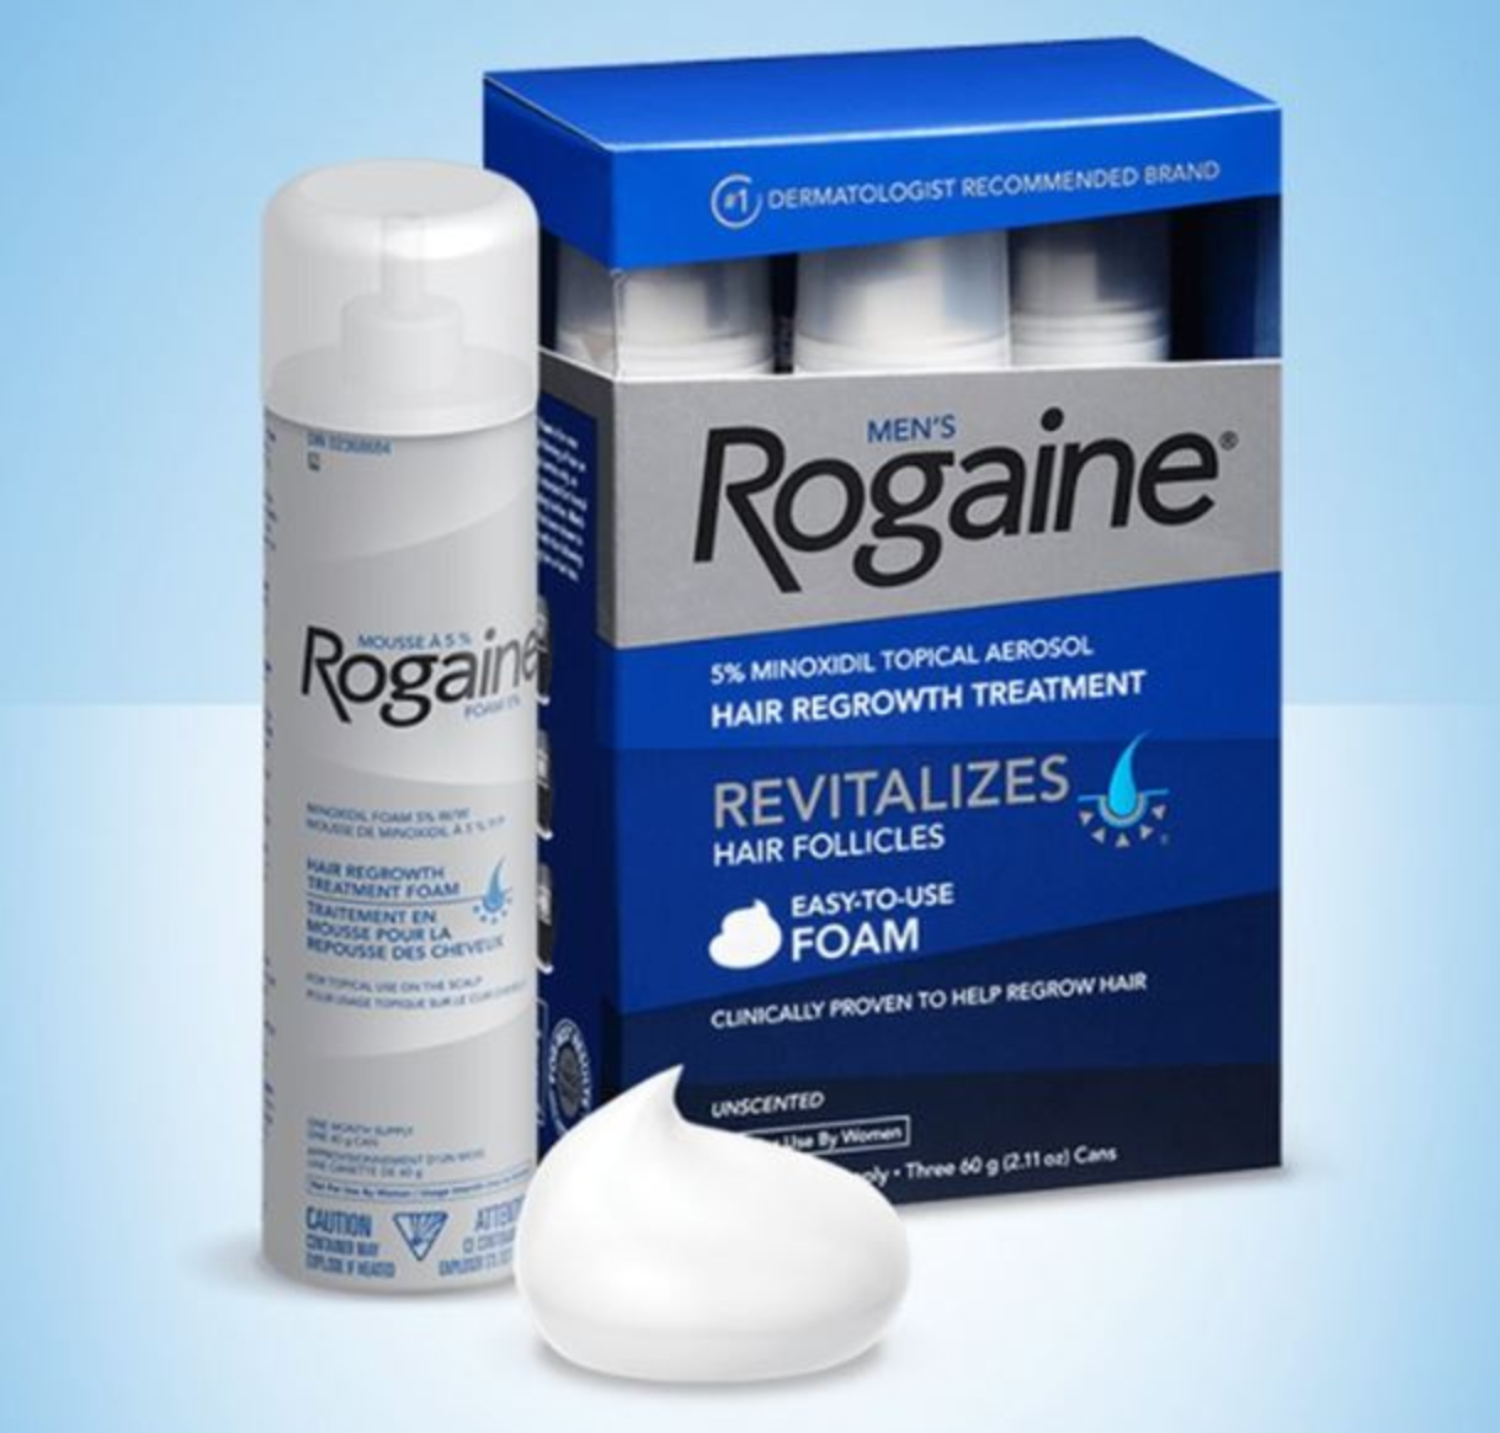 Thuốc Minoxidil (Rogaine) điều trị rụng tóc